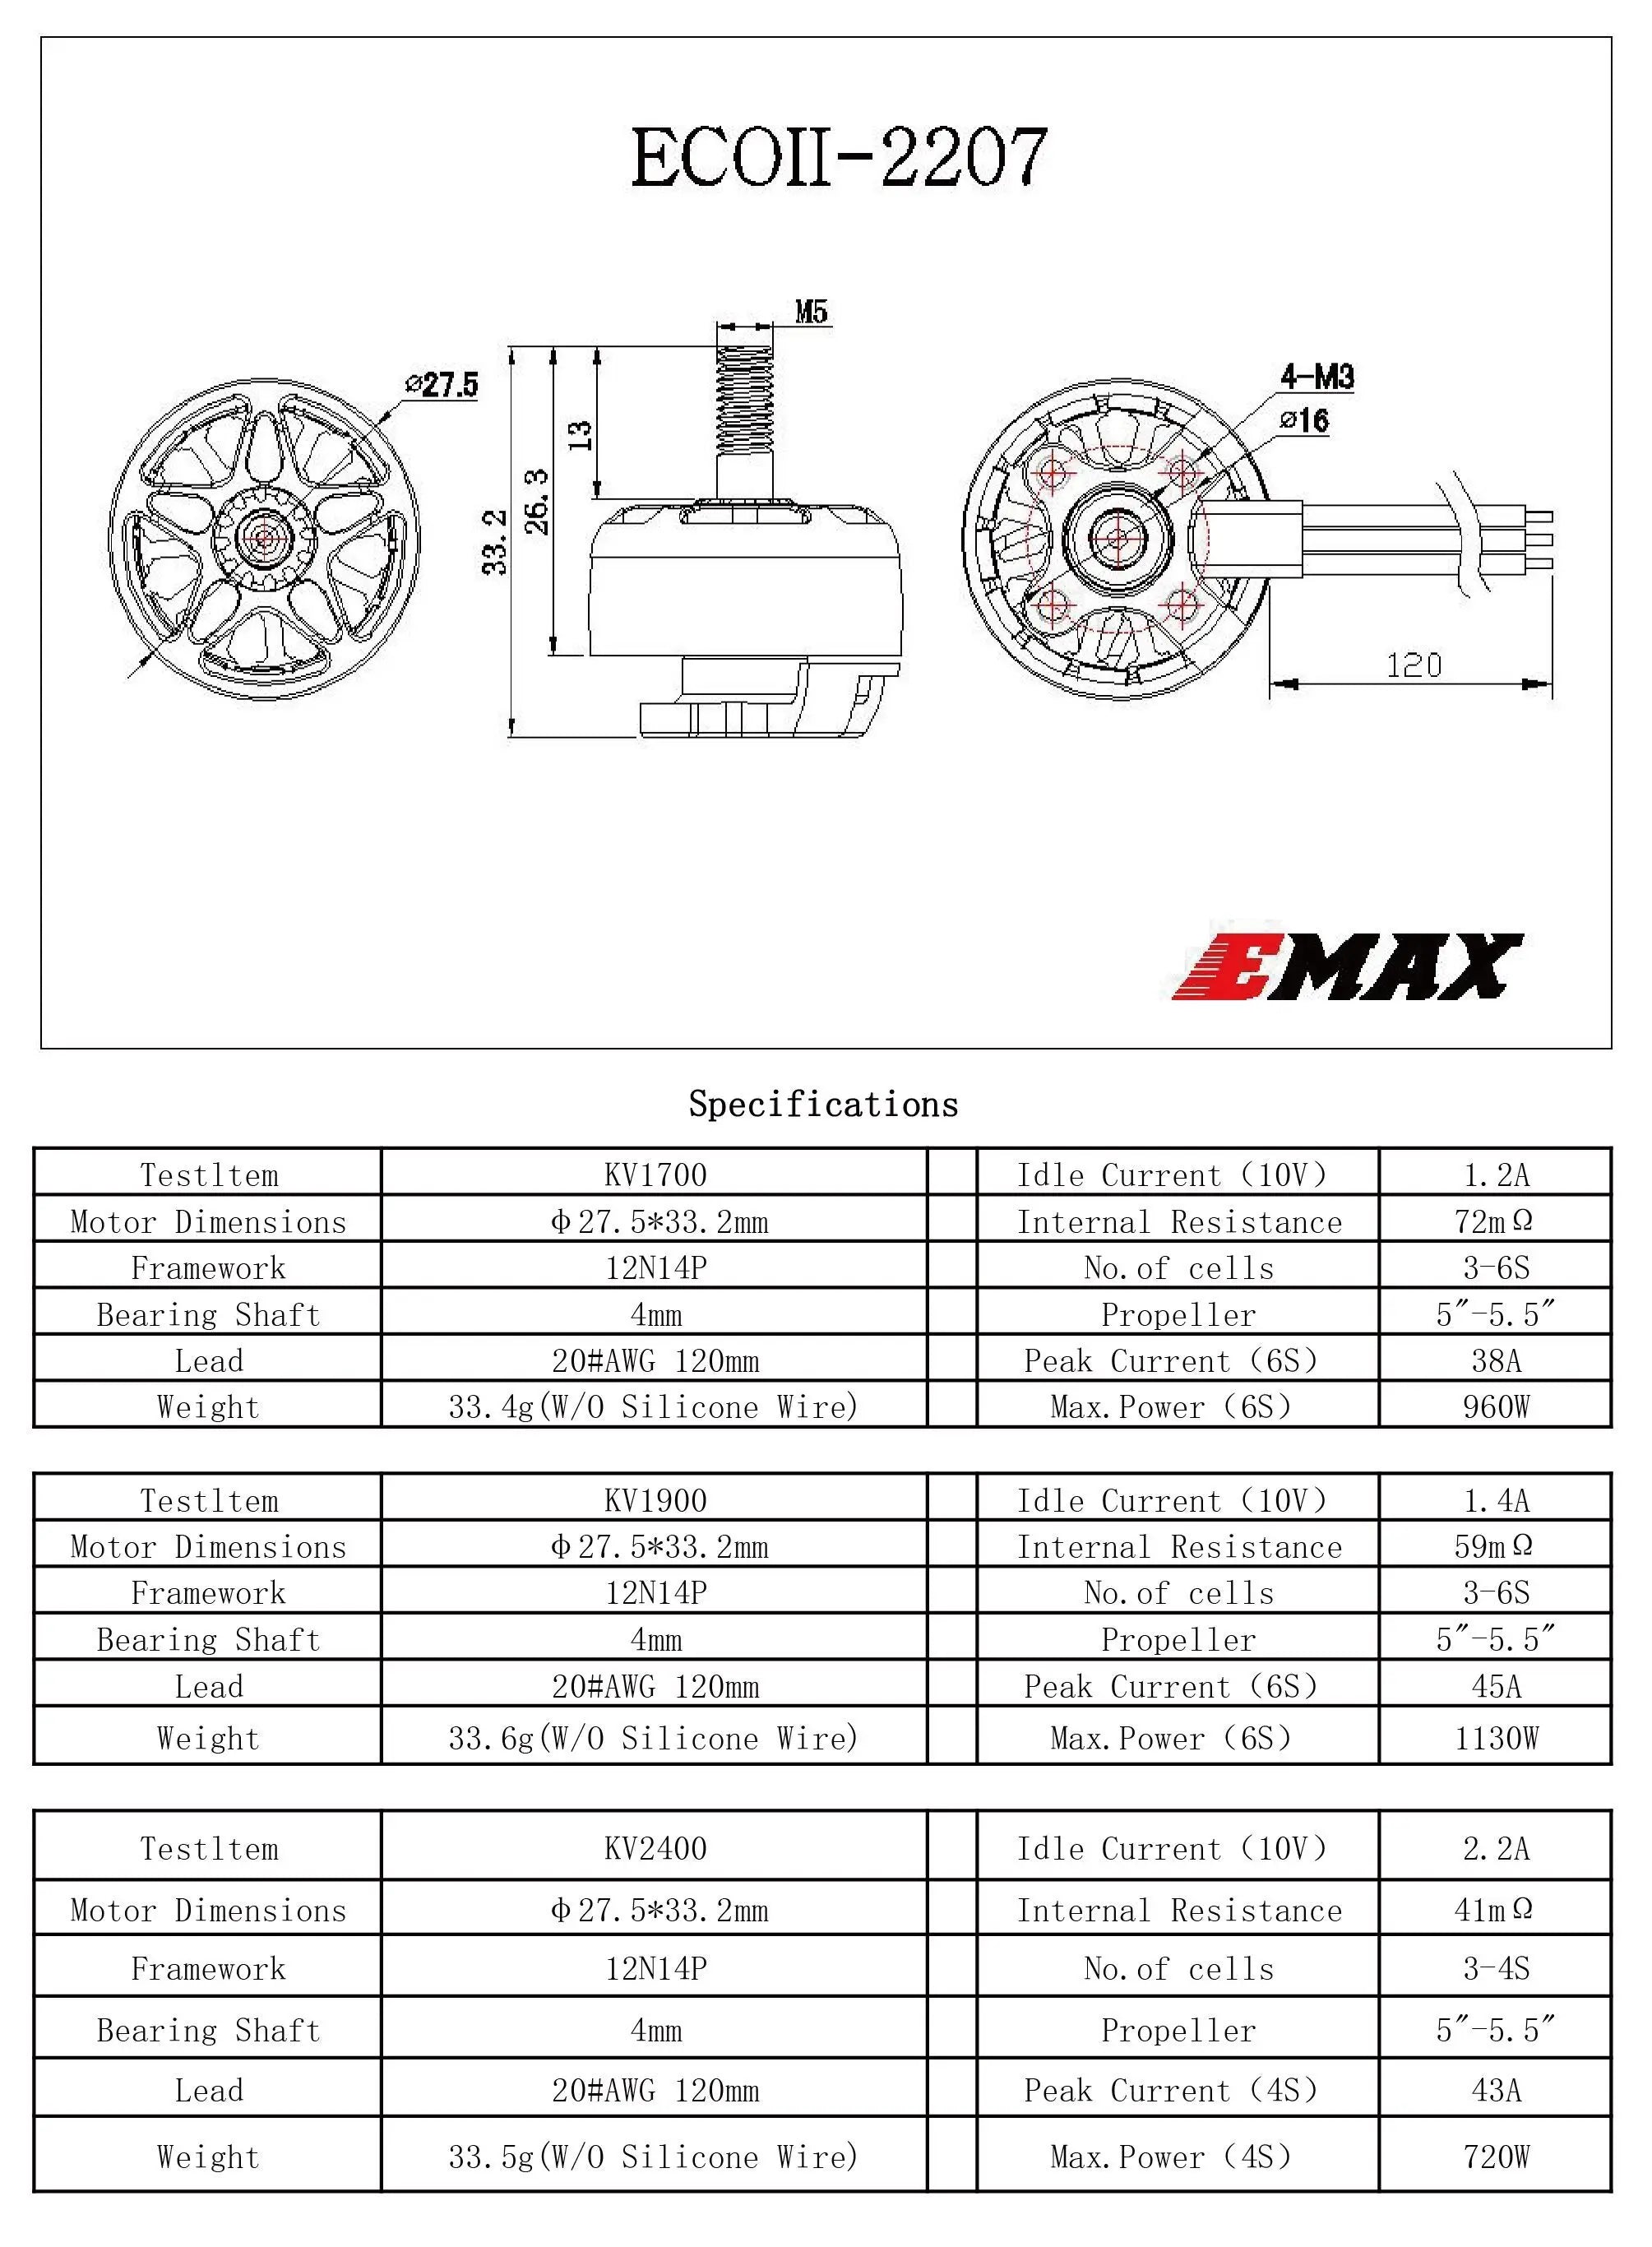 Emax Official ECO II 2207 Motor, 2mm Internal Resistance 72m Q Framework 12N14P No. of cells 3-6S